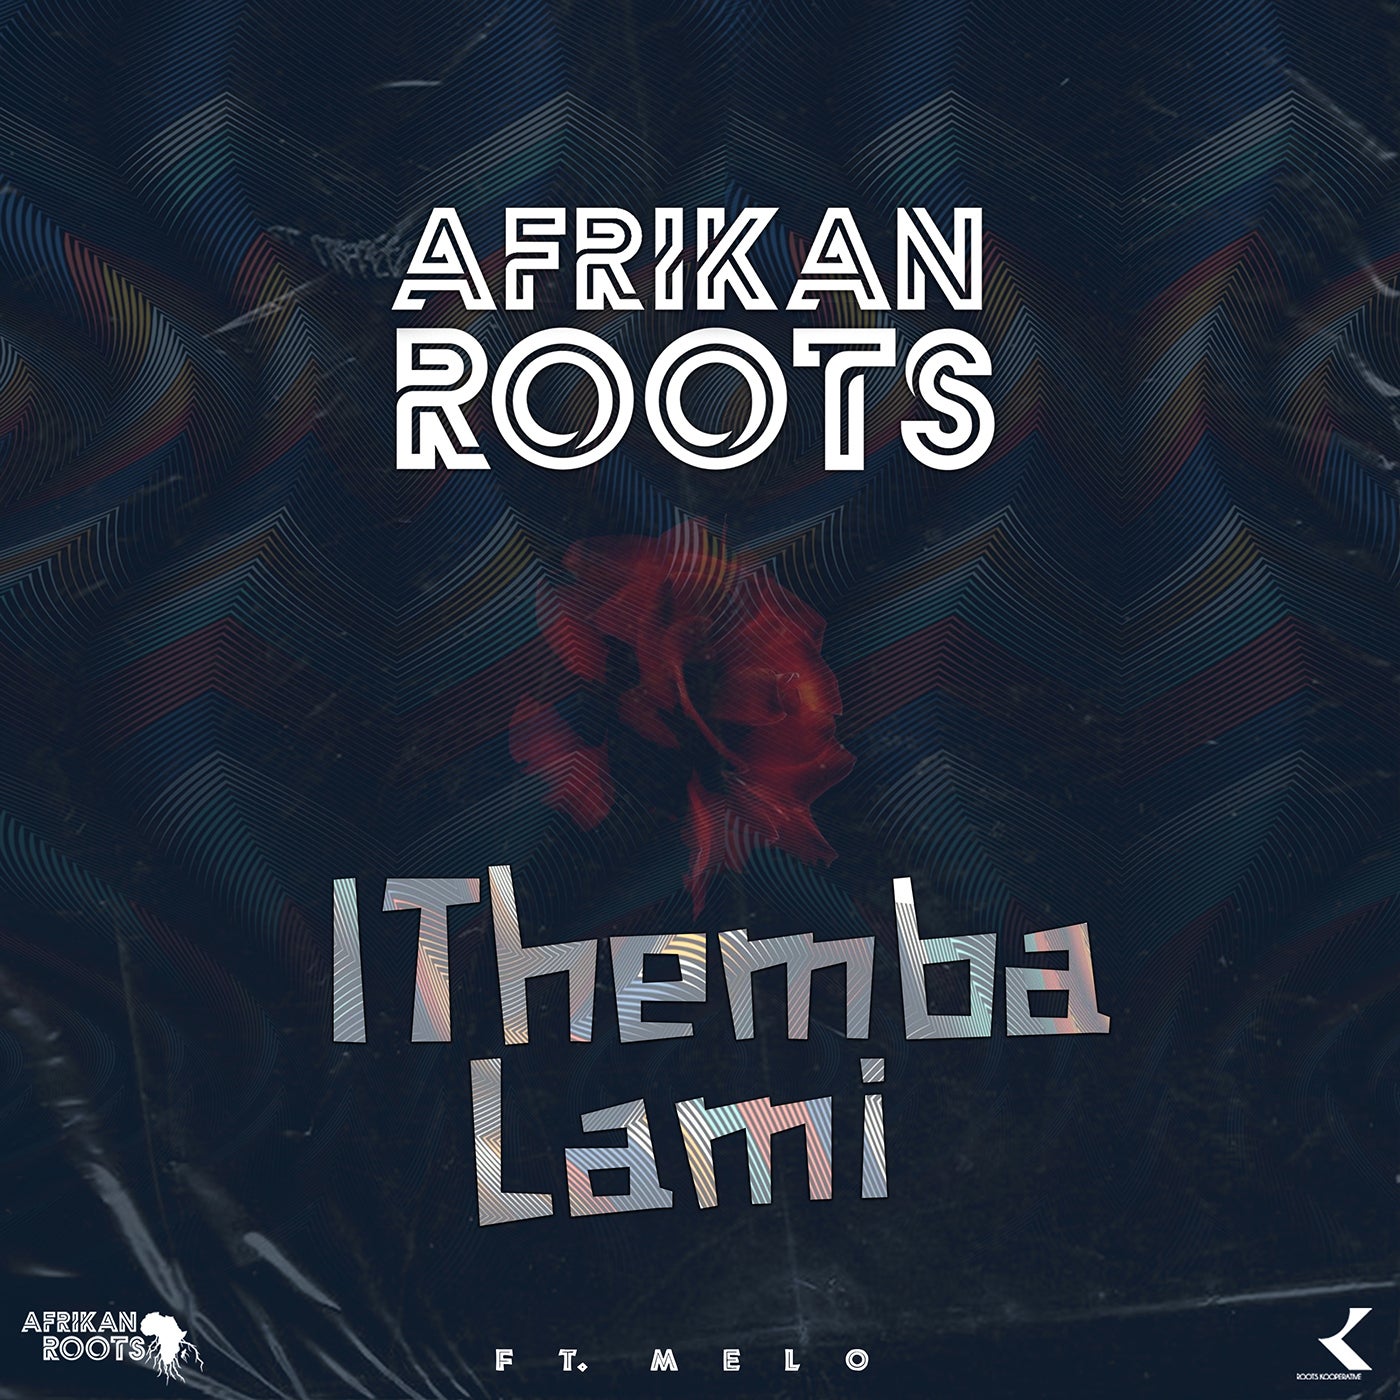 iThemba Lami (feat. Melo)